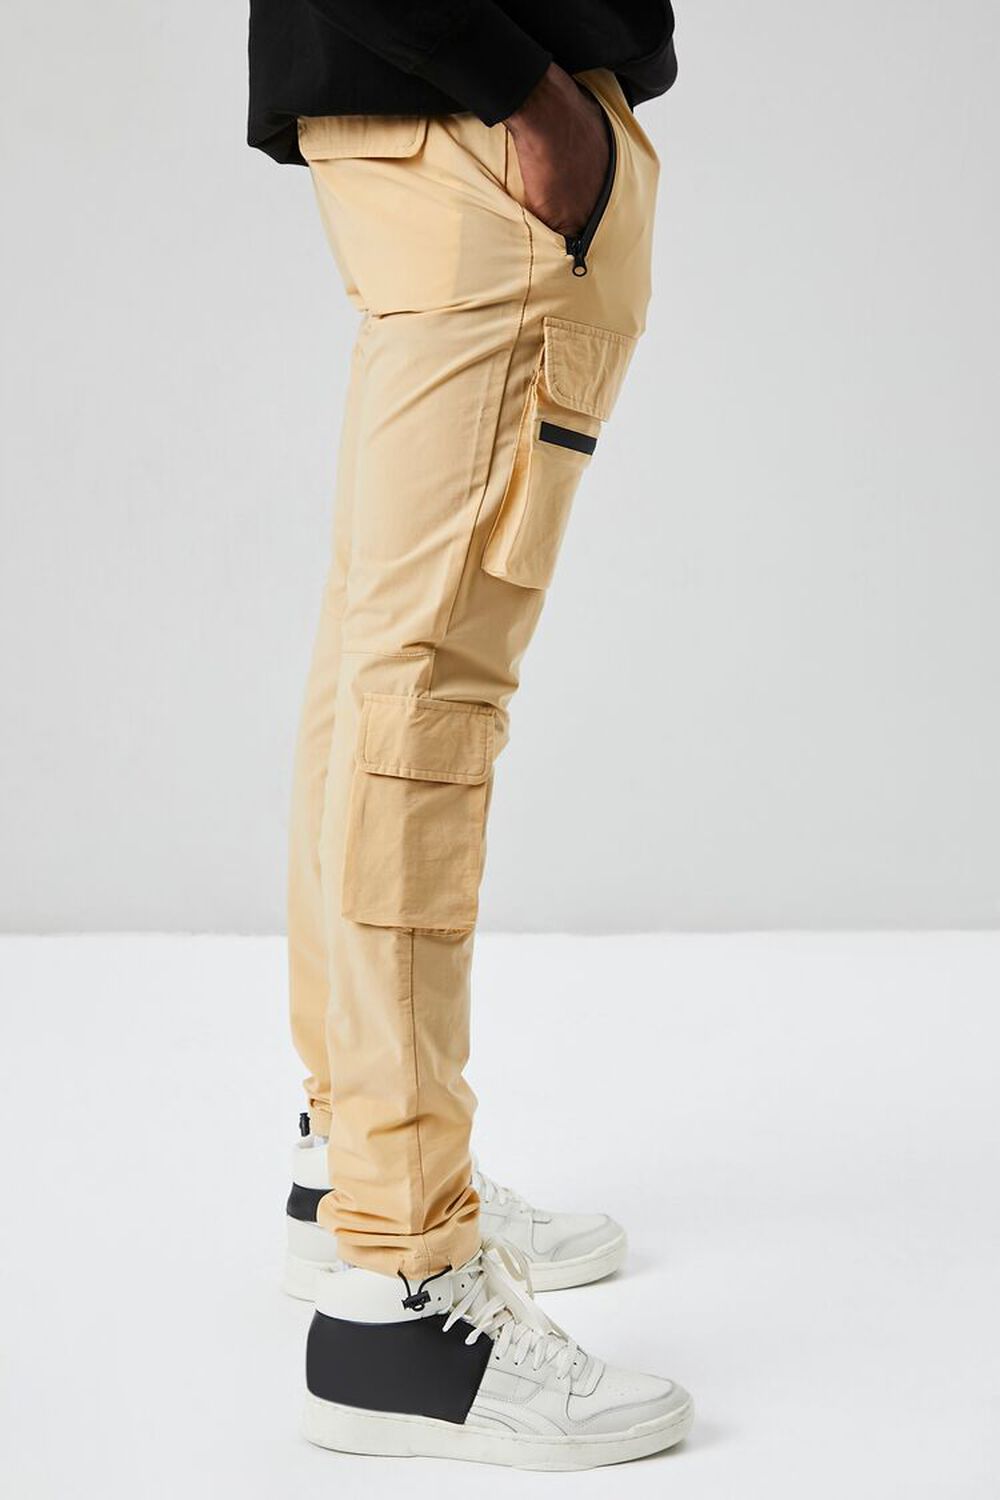 KHAKI Drawstring Cargo Slim-Fit Pants, image 3